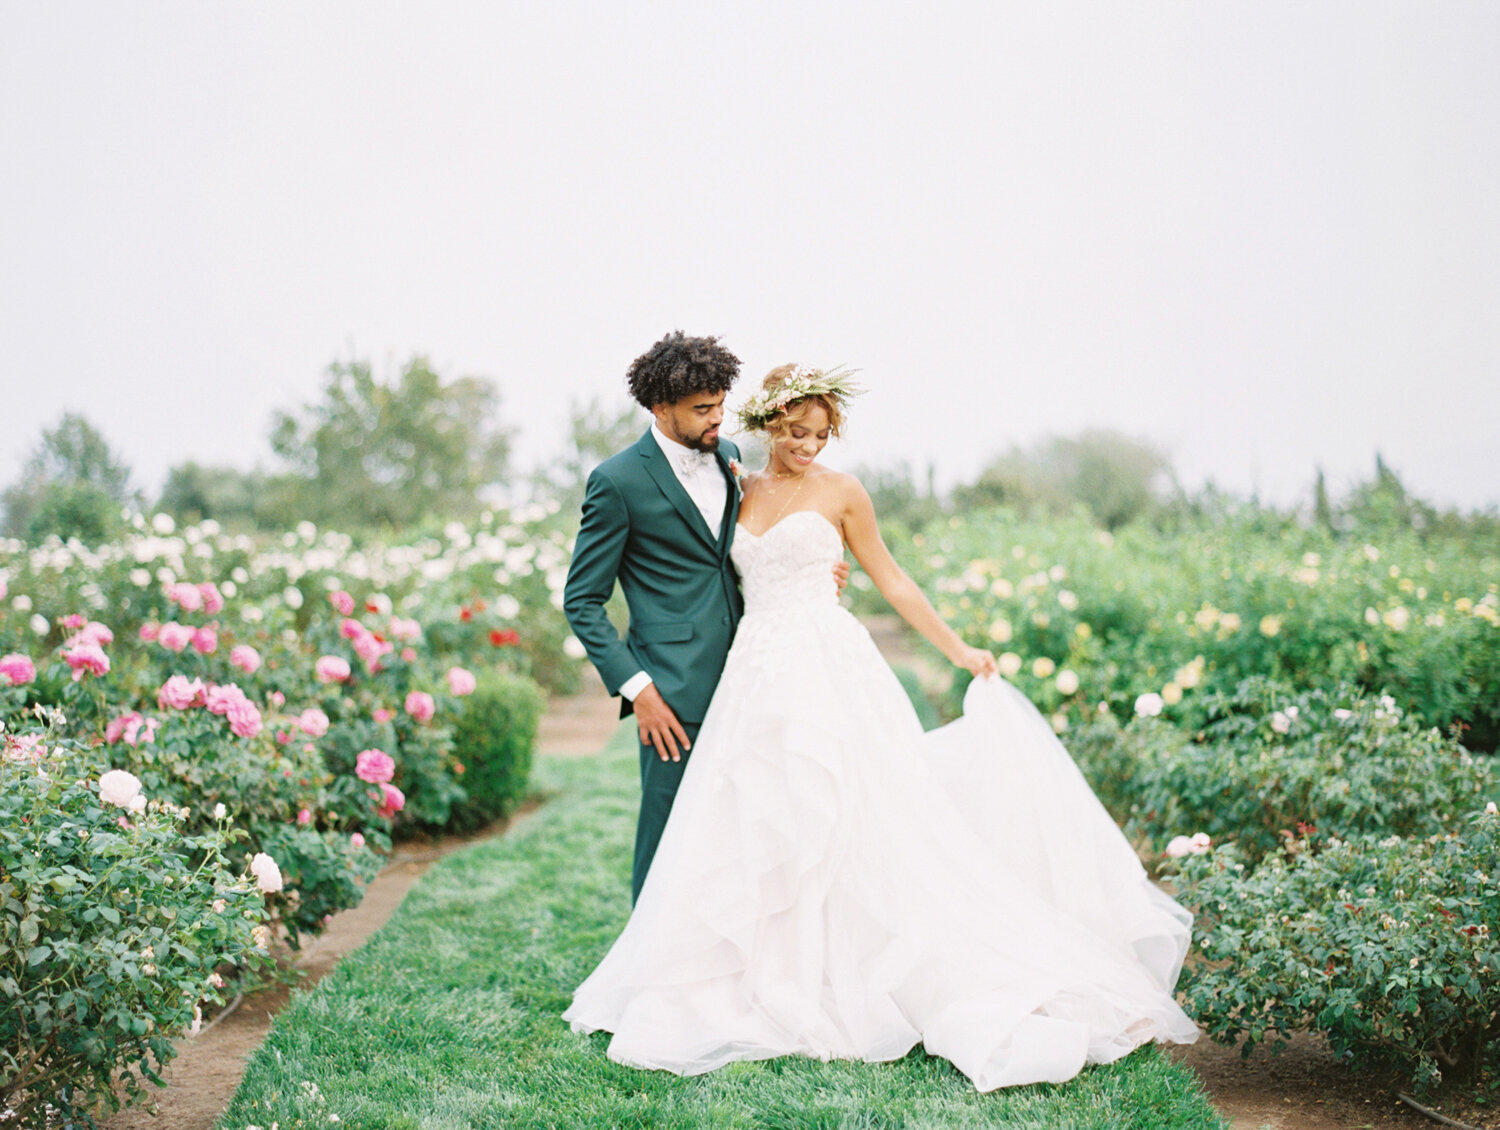 wisteria-photography.com | Wisteria Photography | Intimate Rose Garden Wedding | Santa Ynez | Featured on Green Wedding Shoes | Southern California Photographer-42.jpg